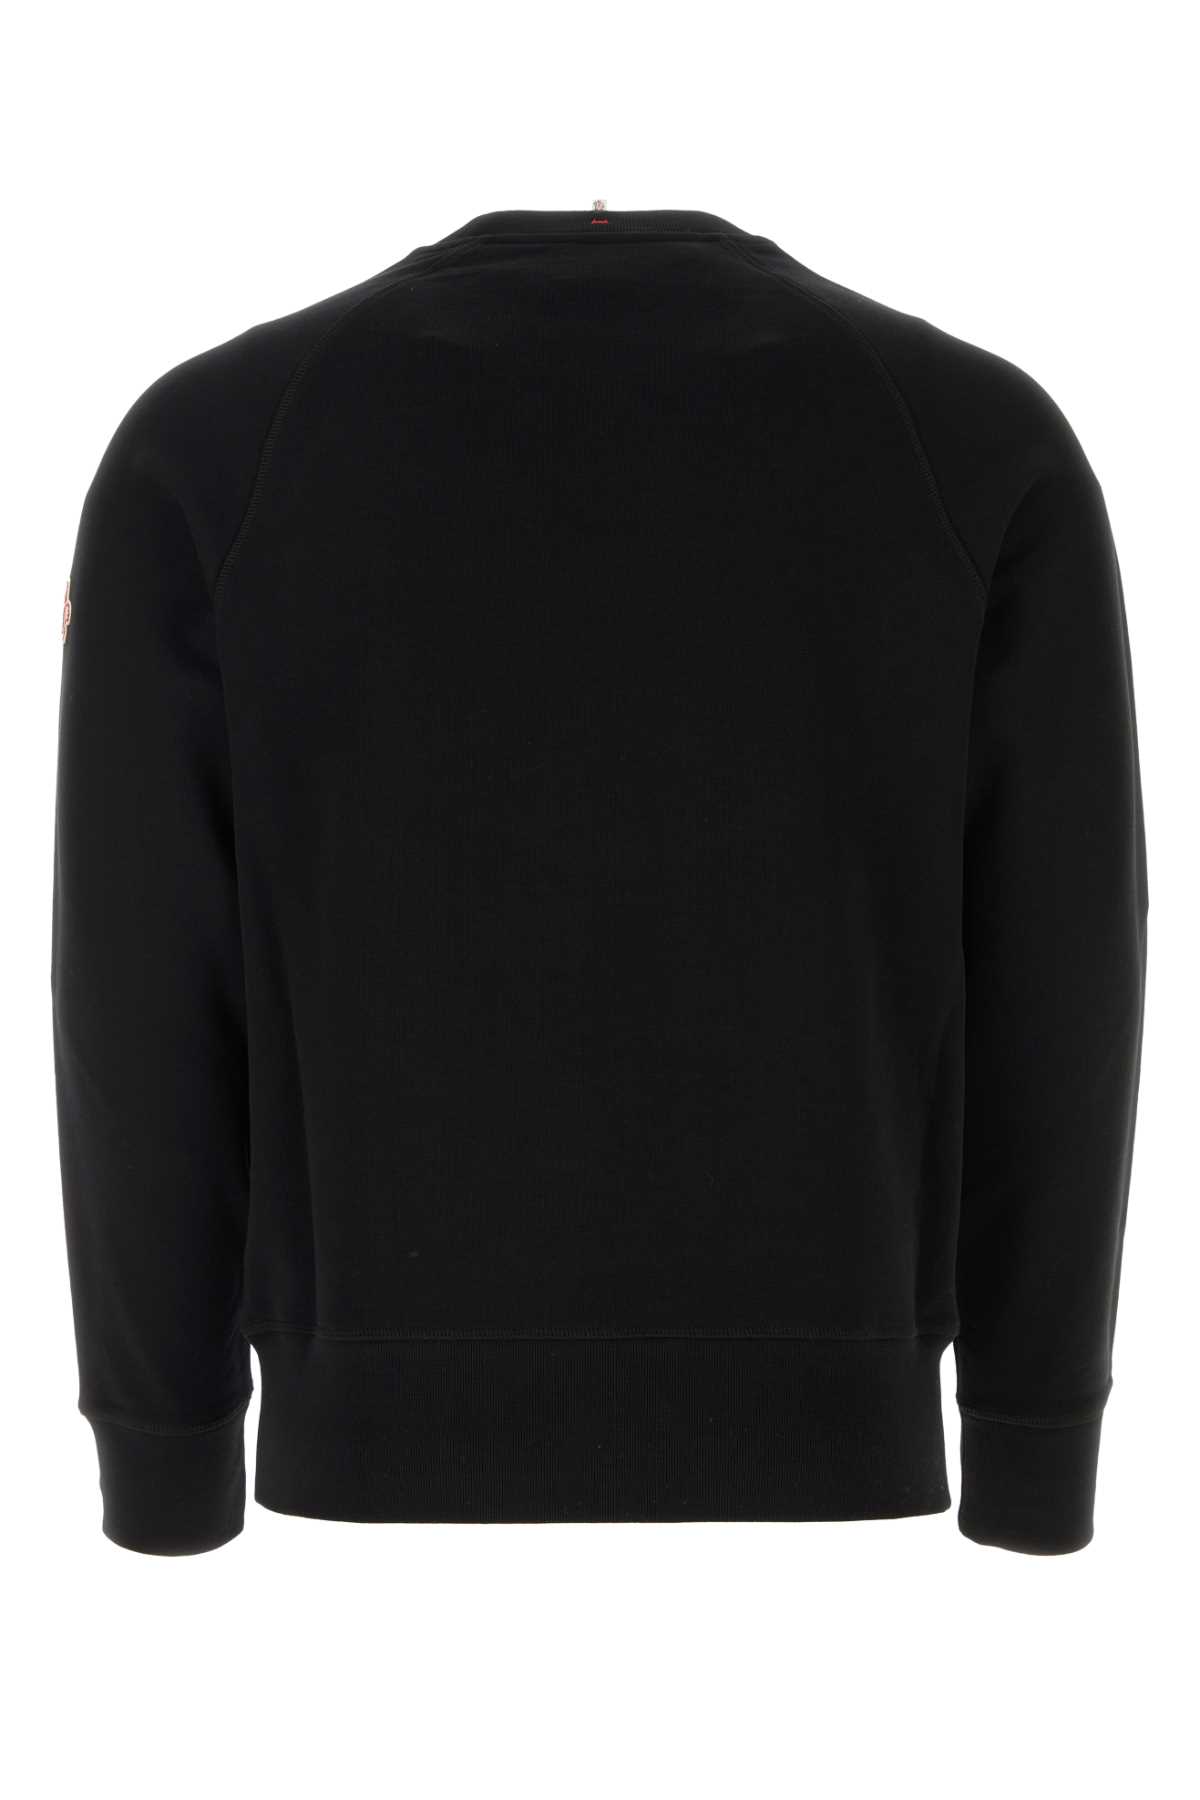 Moncler Black Cotton Sweatshirt In 999